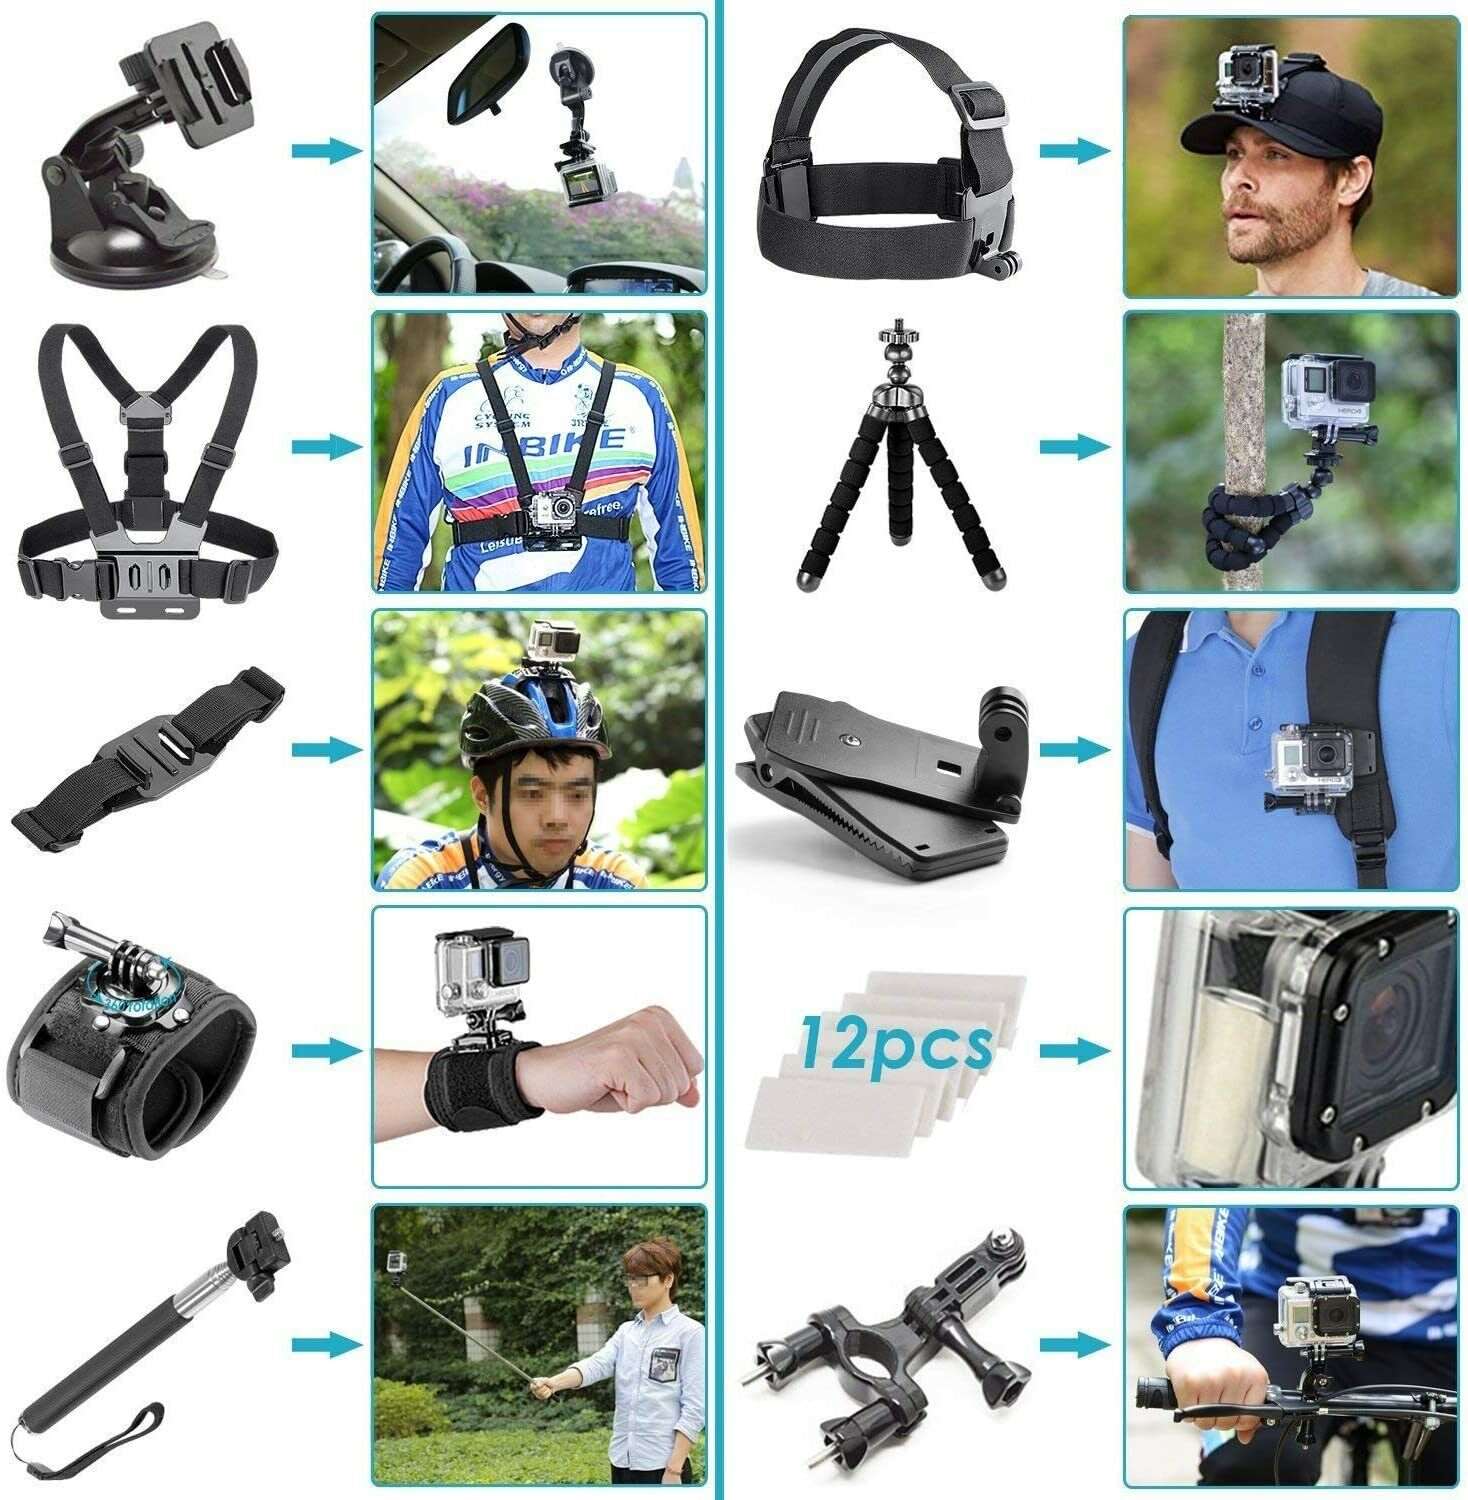 GoPro HERO10 Black - Waterproof Action Camera + 50 Piece Accessory Kit - Bundle